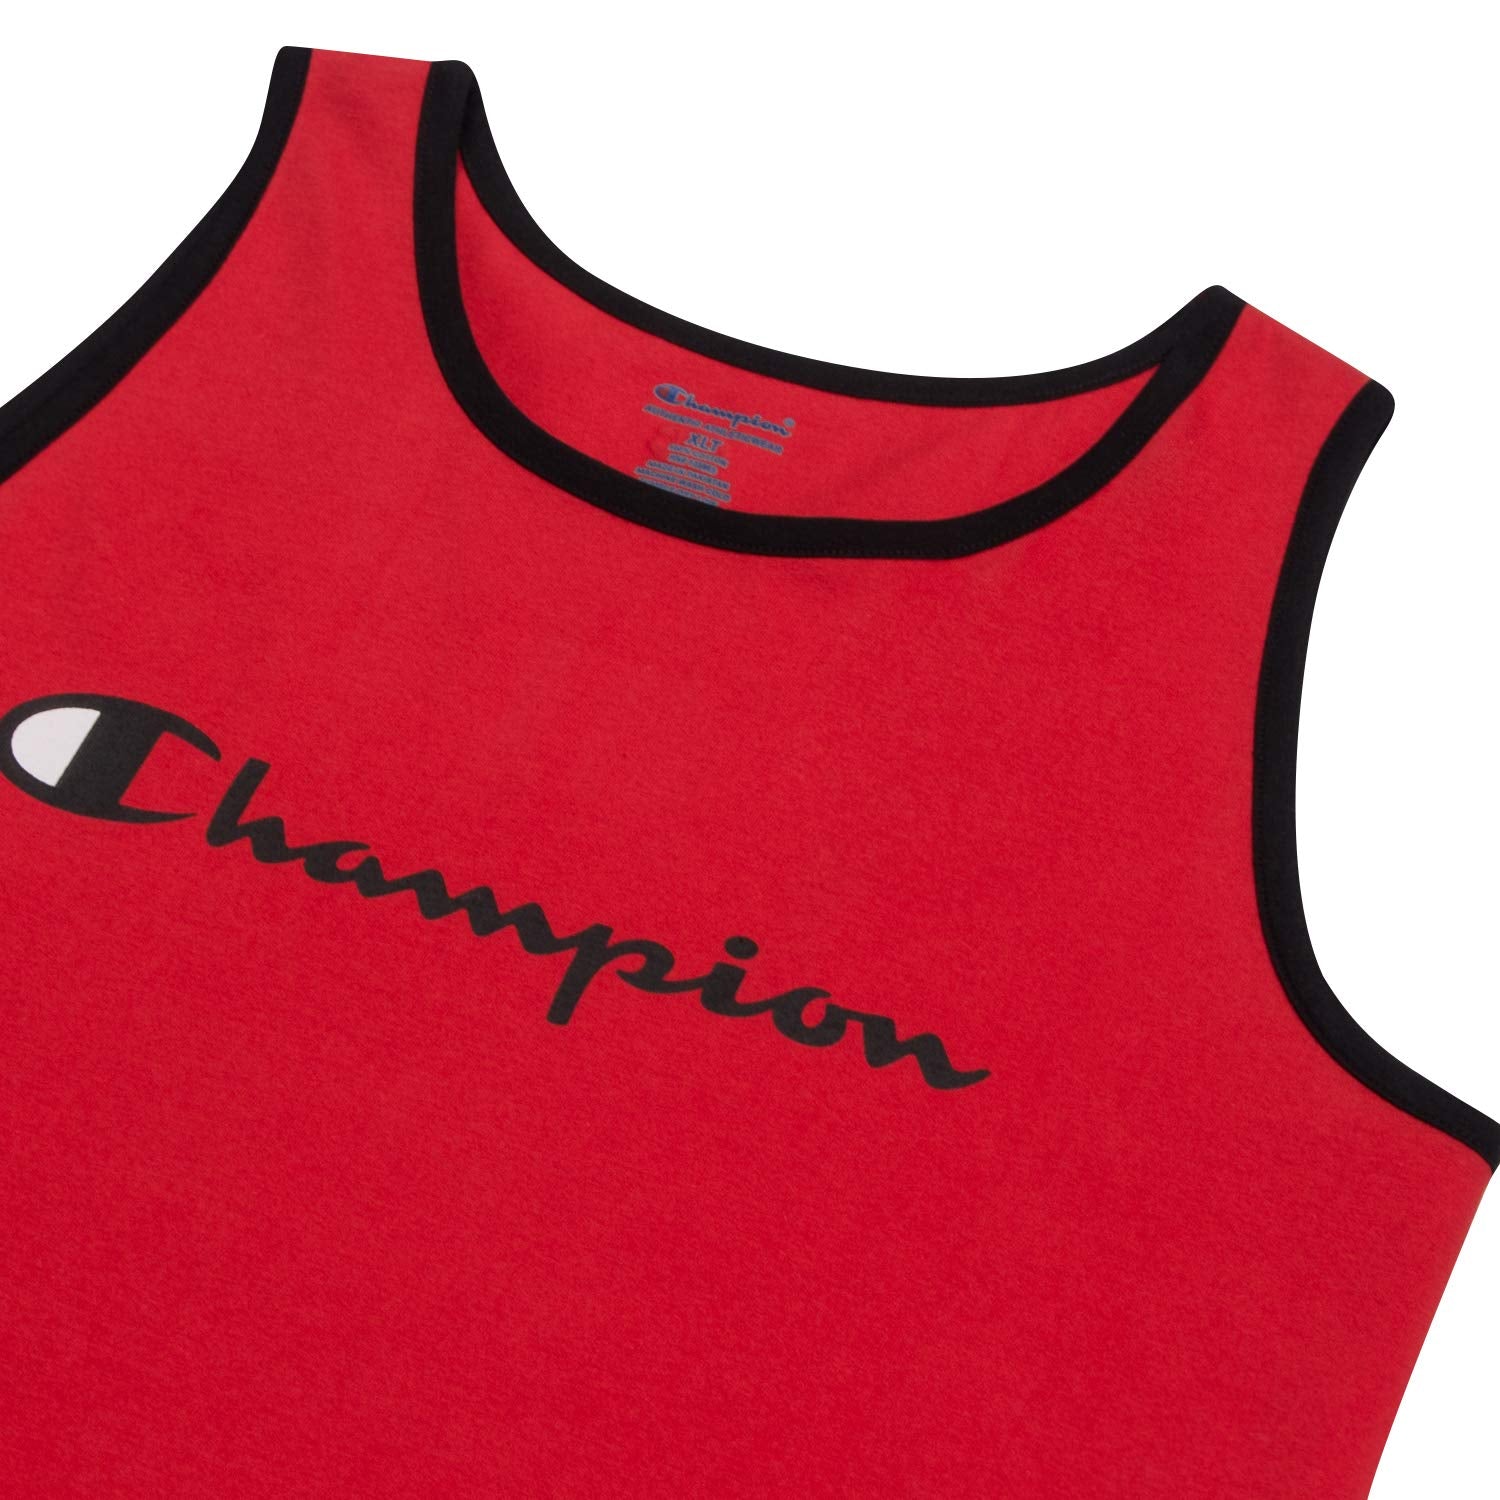 Champion Men's Top - Red - XL